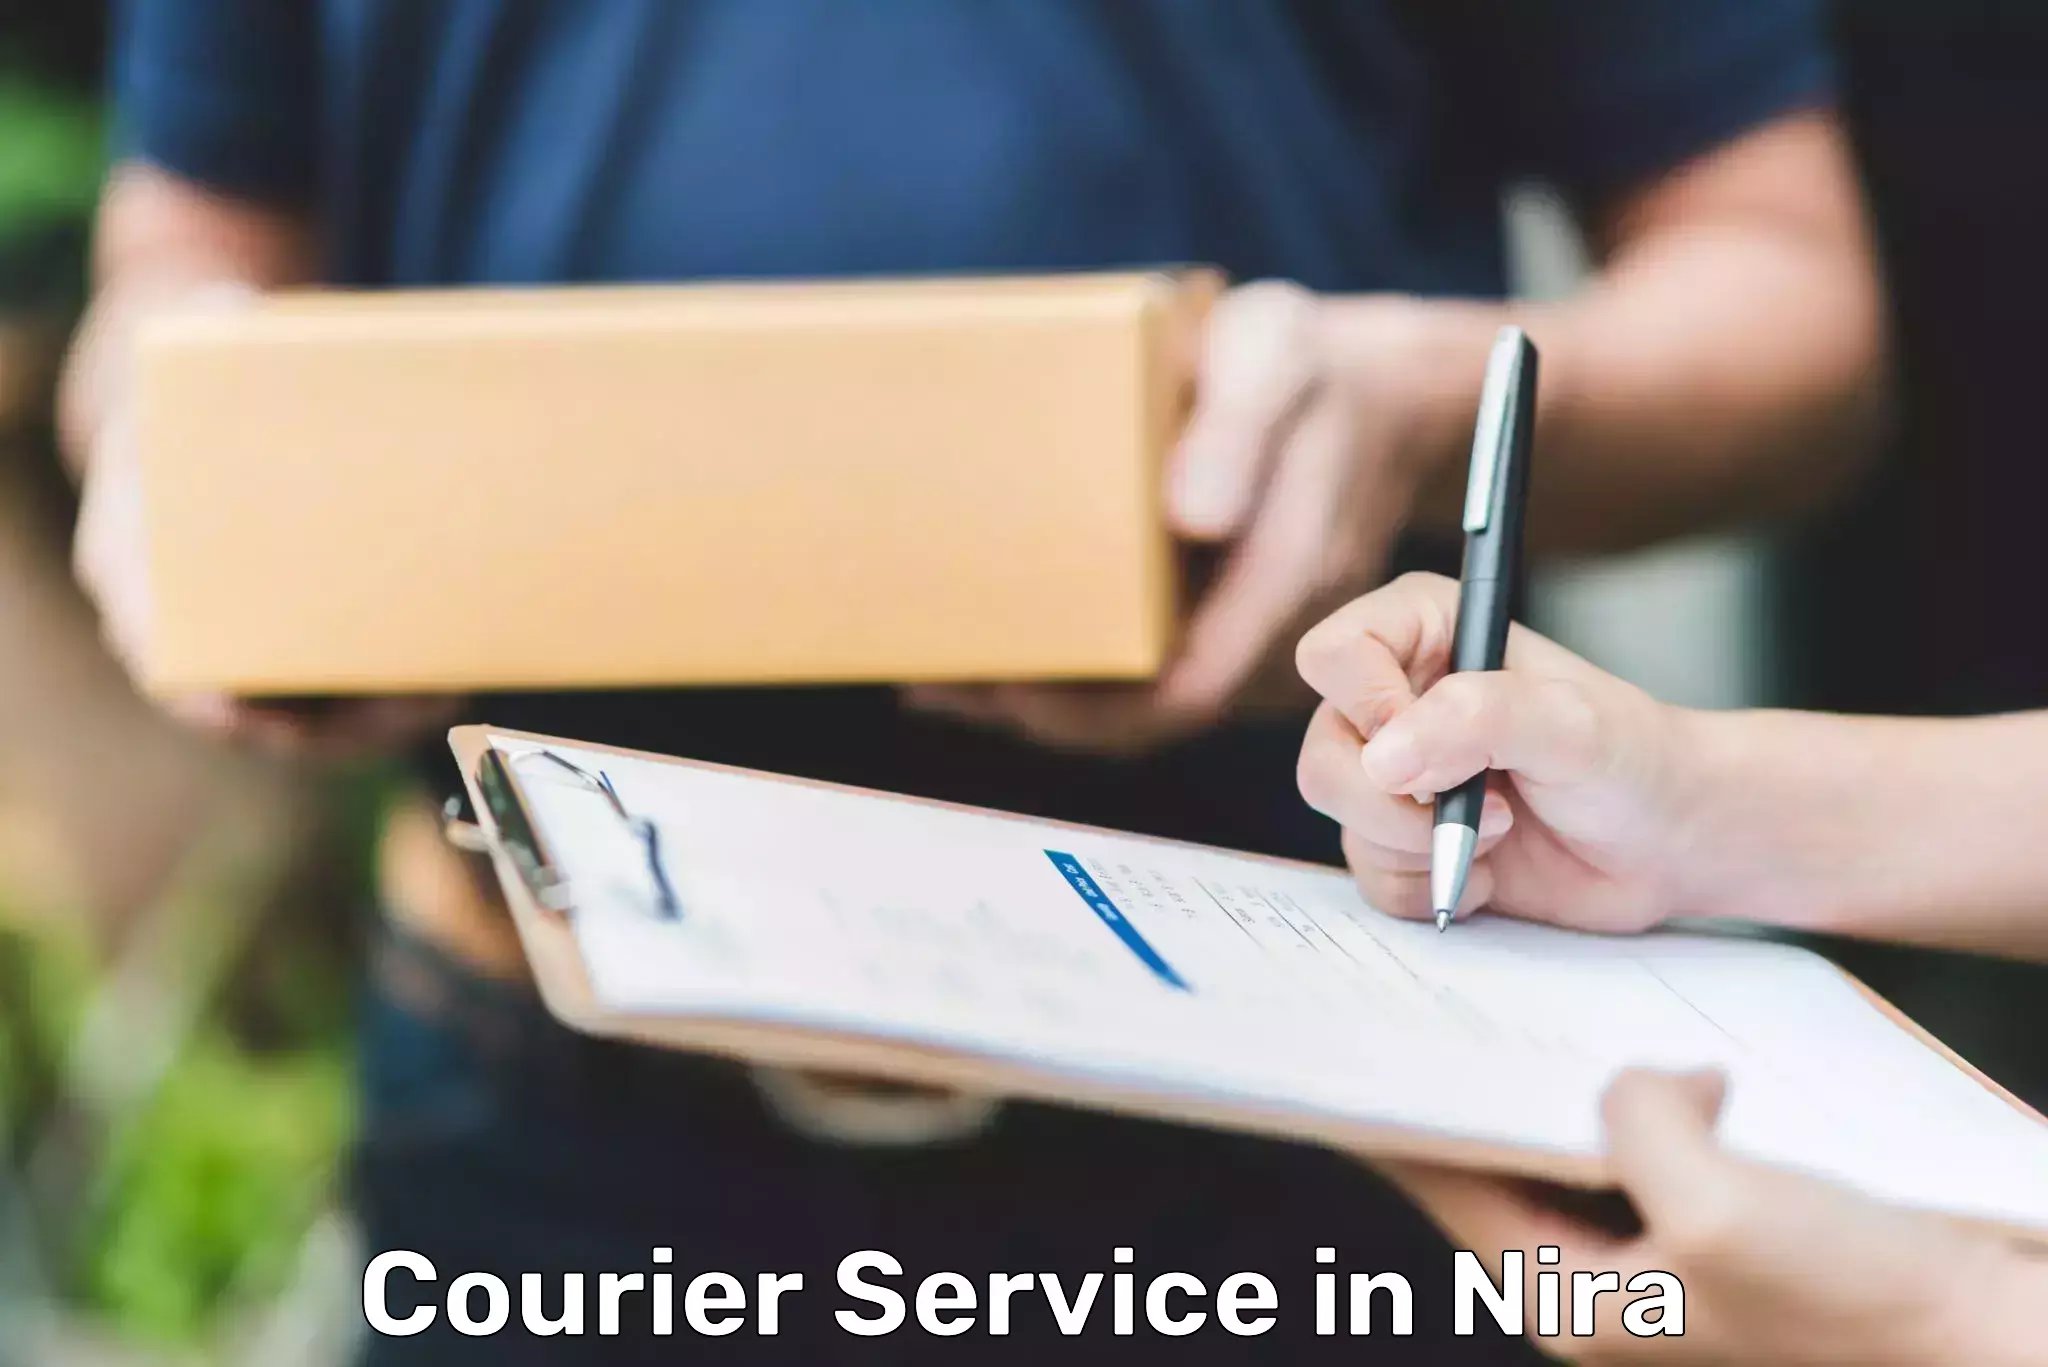 Cargo delivery service in Nira